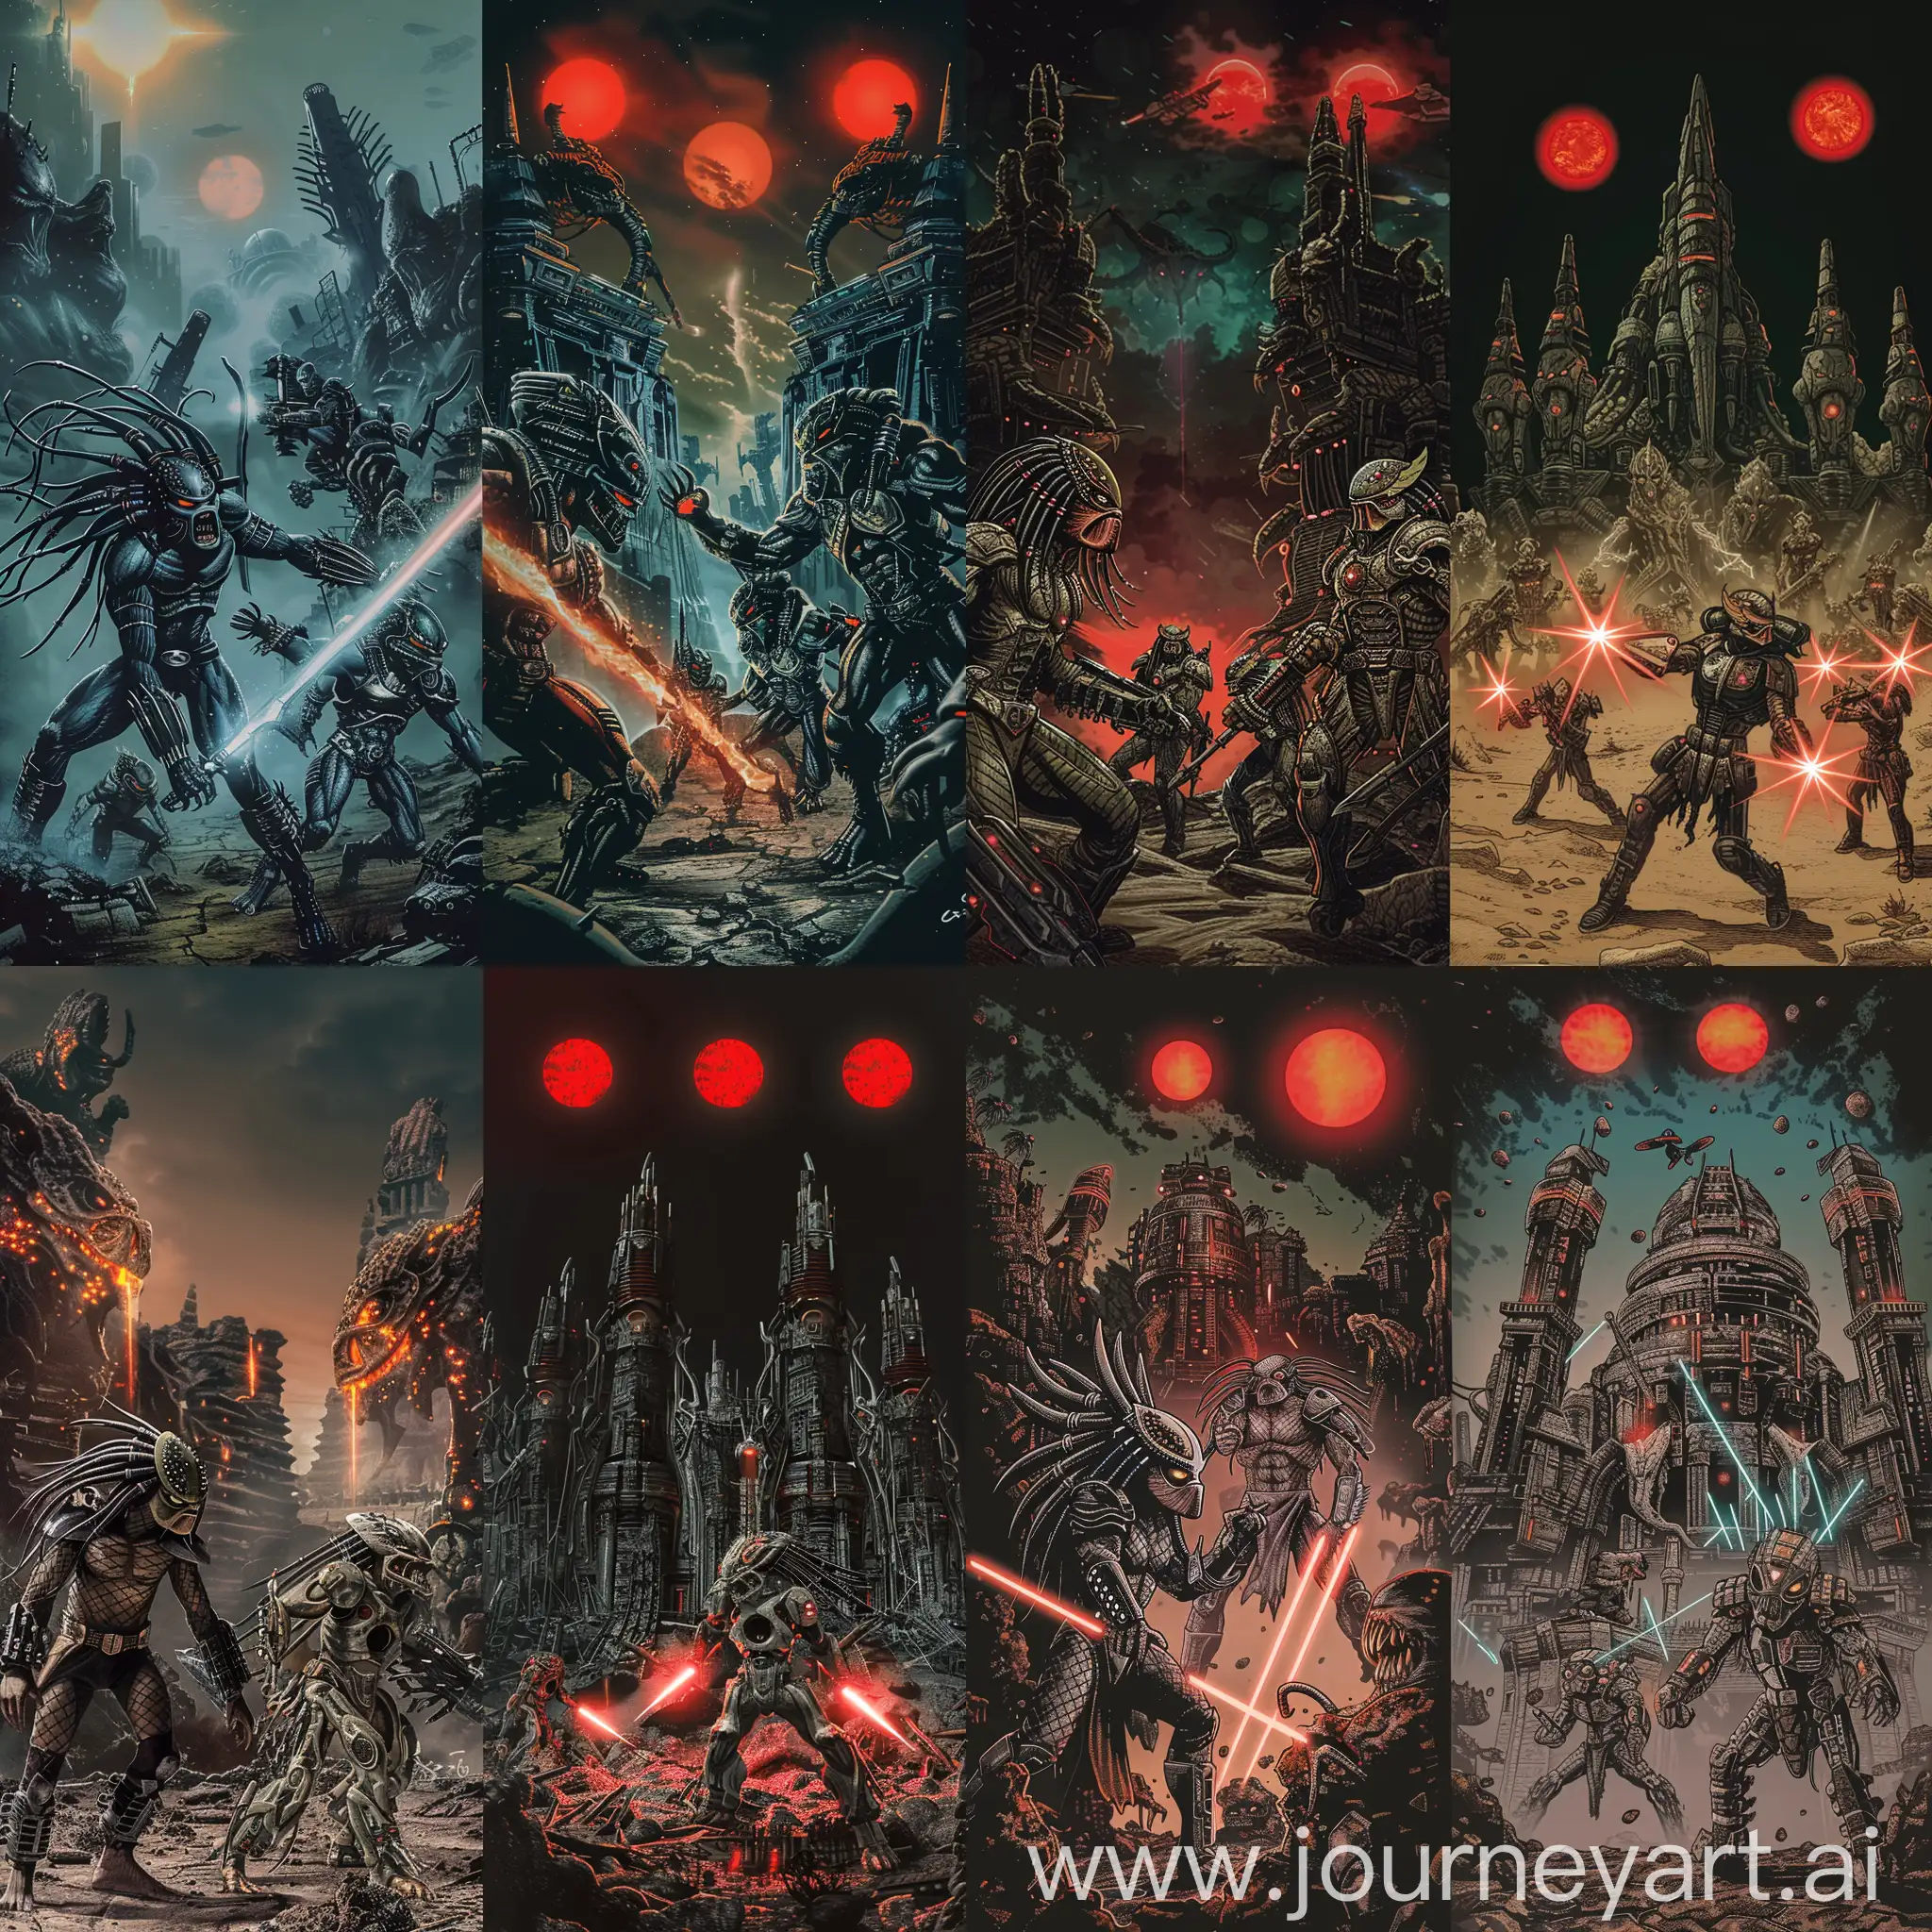 Intergalactic-Showdown-Predator-Warriors-vs-Protoss-Zealots-in-Ruined-Cyberpunk-Temples